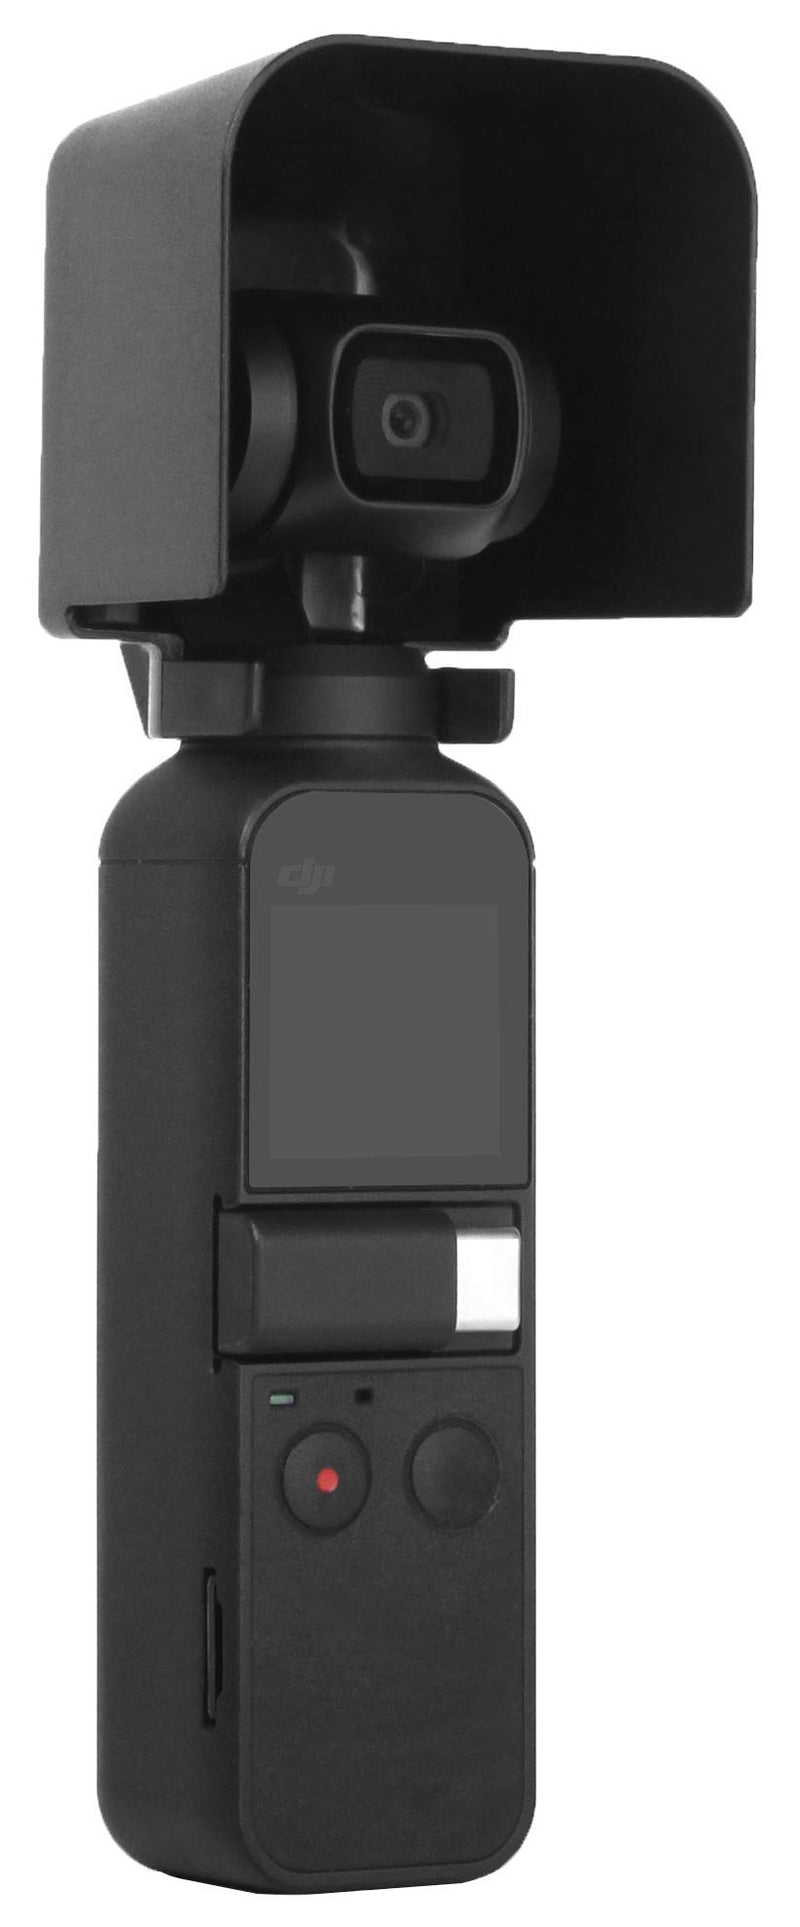 PENIVO OSMO Pocket Camera Lens Hood, Sun Shade Compatible for DJI Osmo Pocket Gimbal Protector Cover Accessories